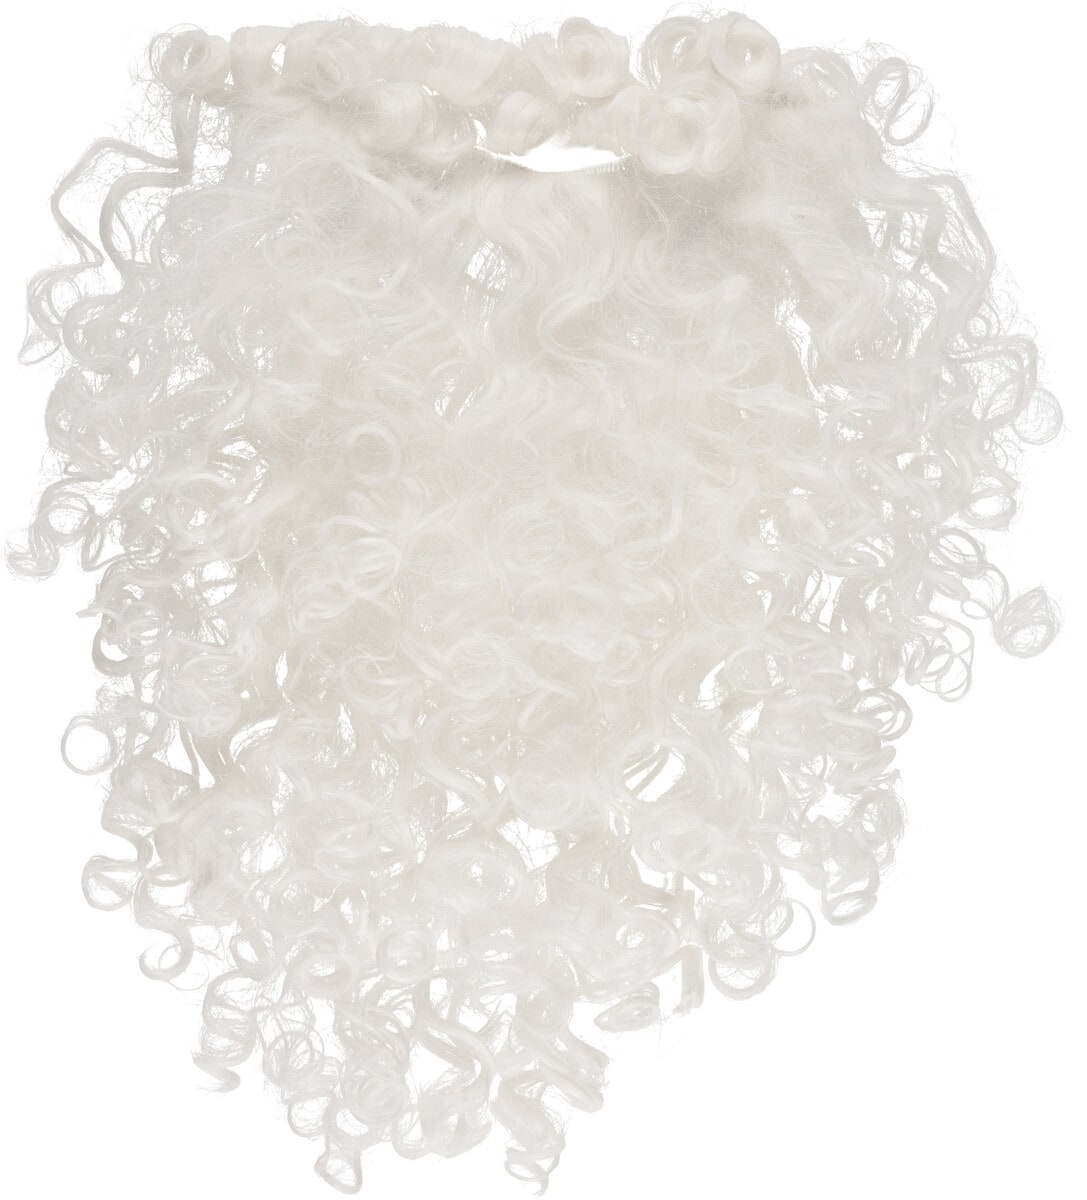 Joulupukin parta premium, valkoinen, 60cm